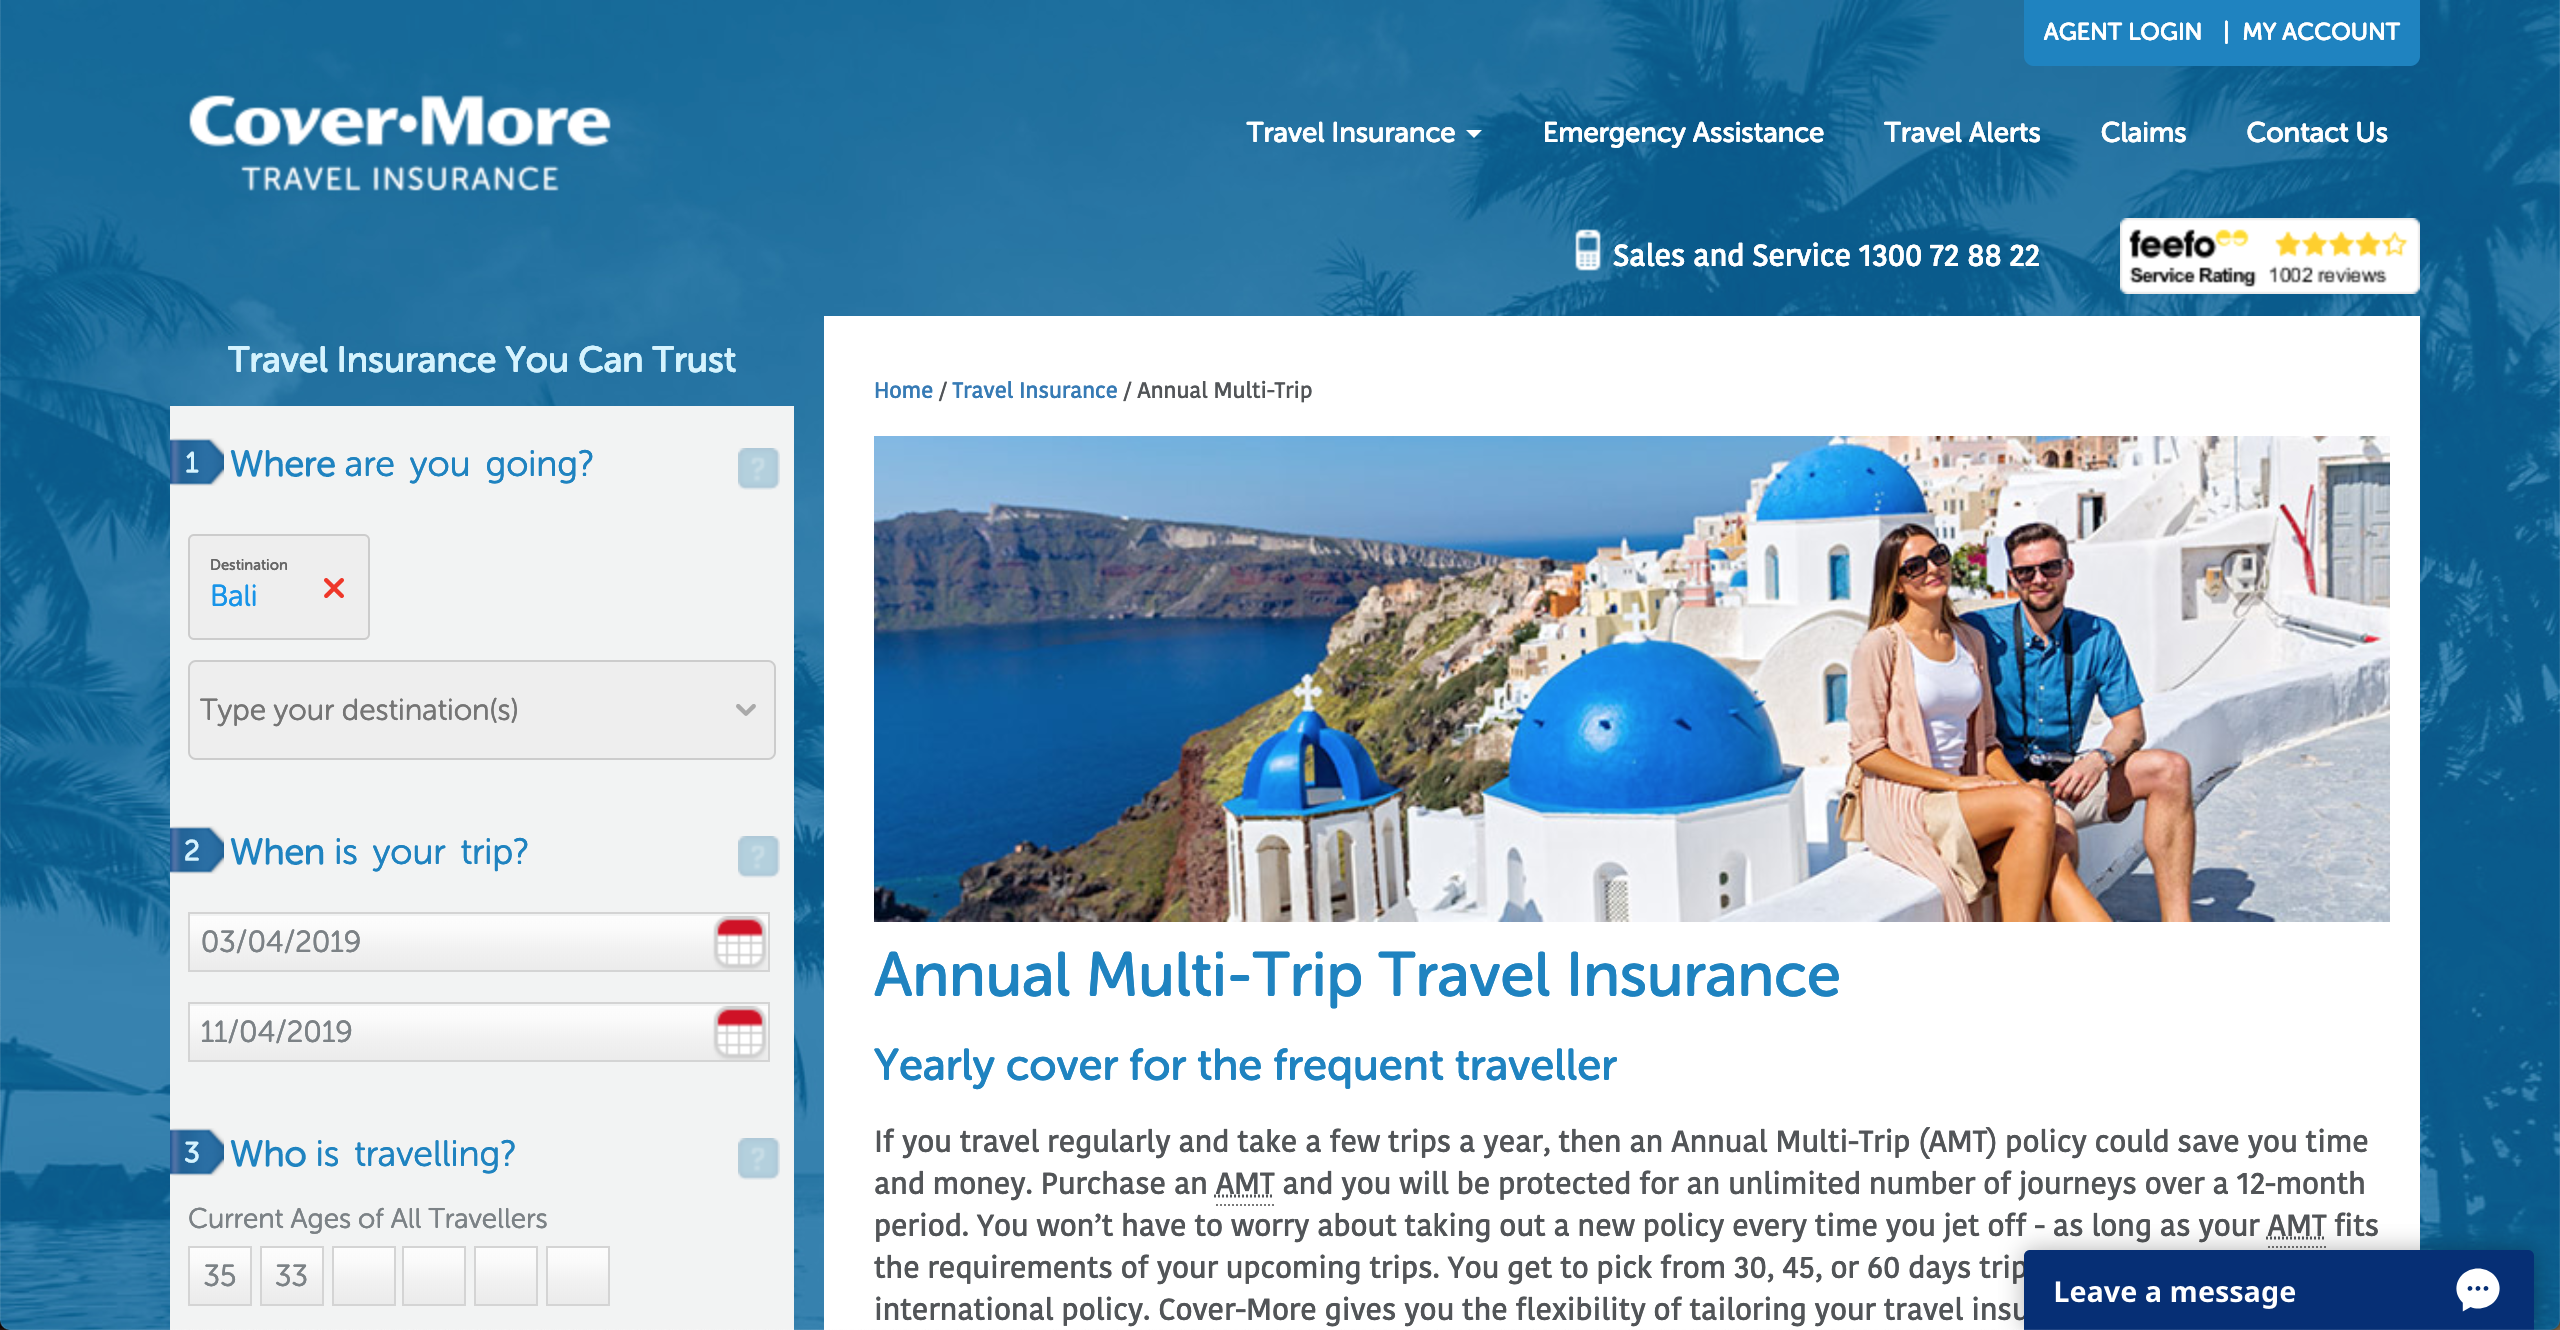 covermore travel insurance australia claims